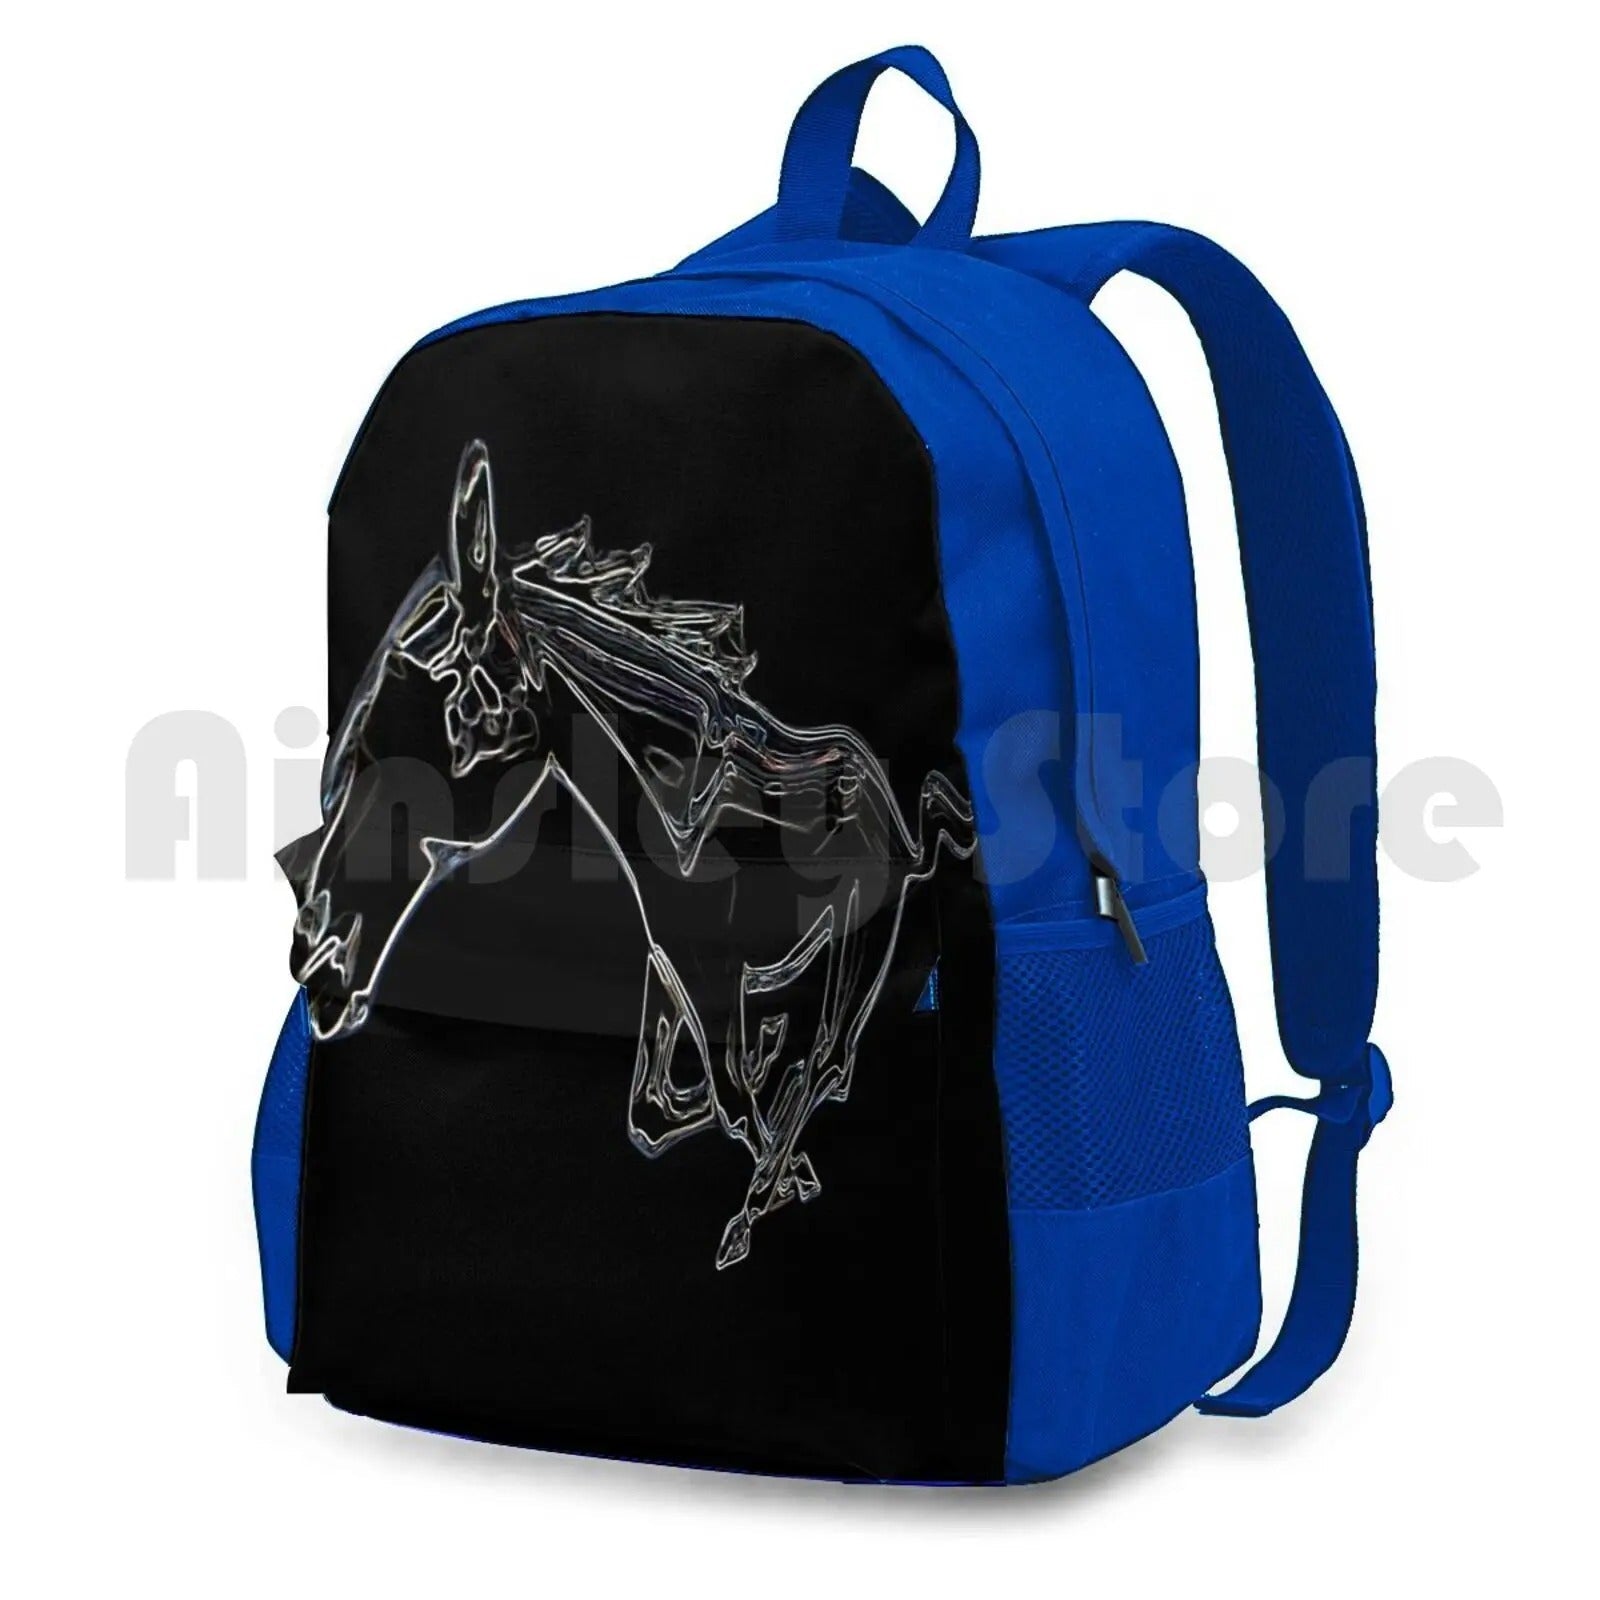 Backpack with Horse Logo - Backpack - Blue